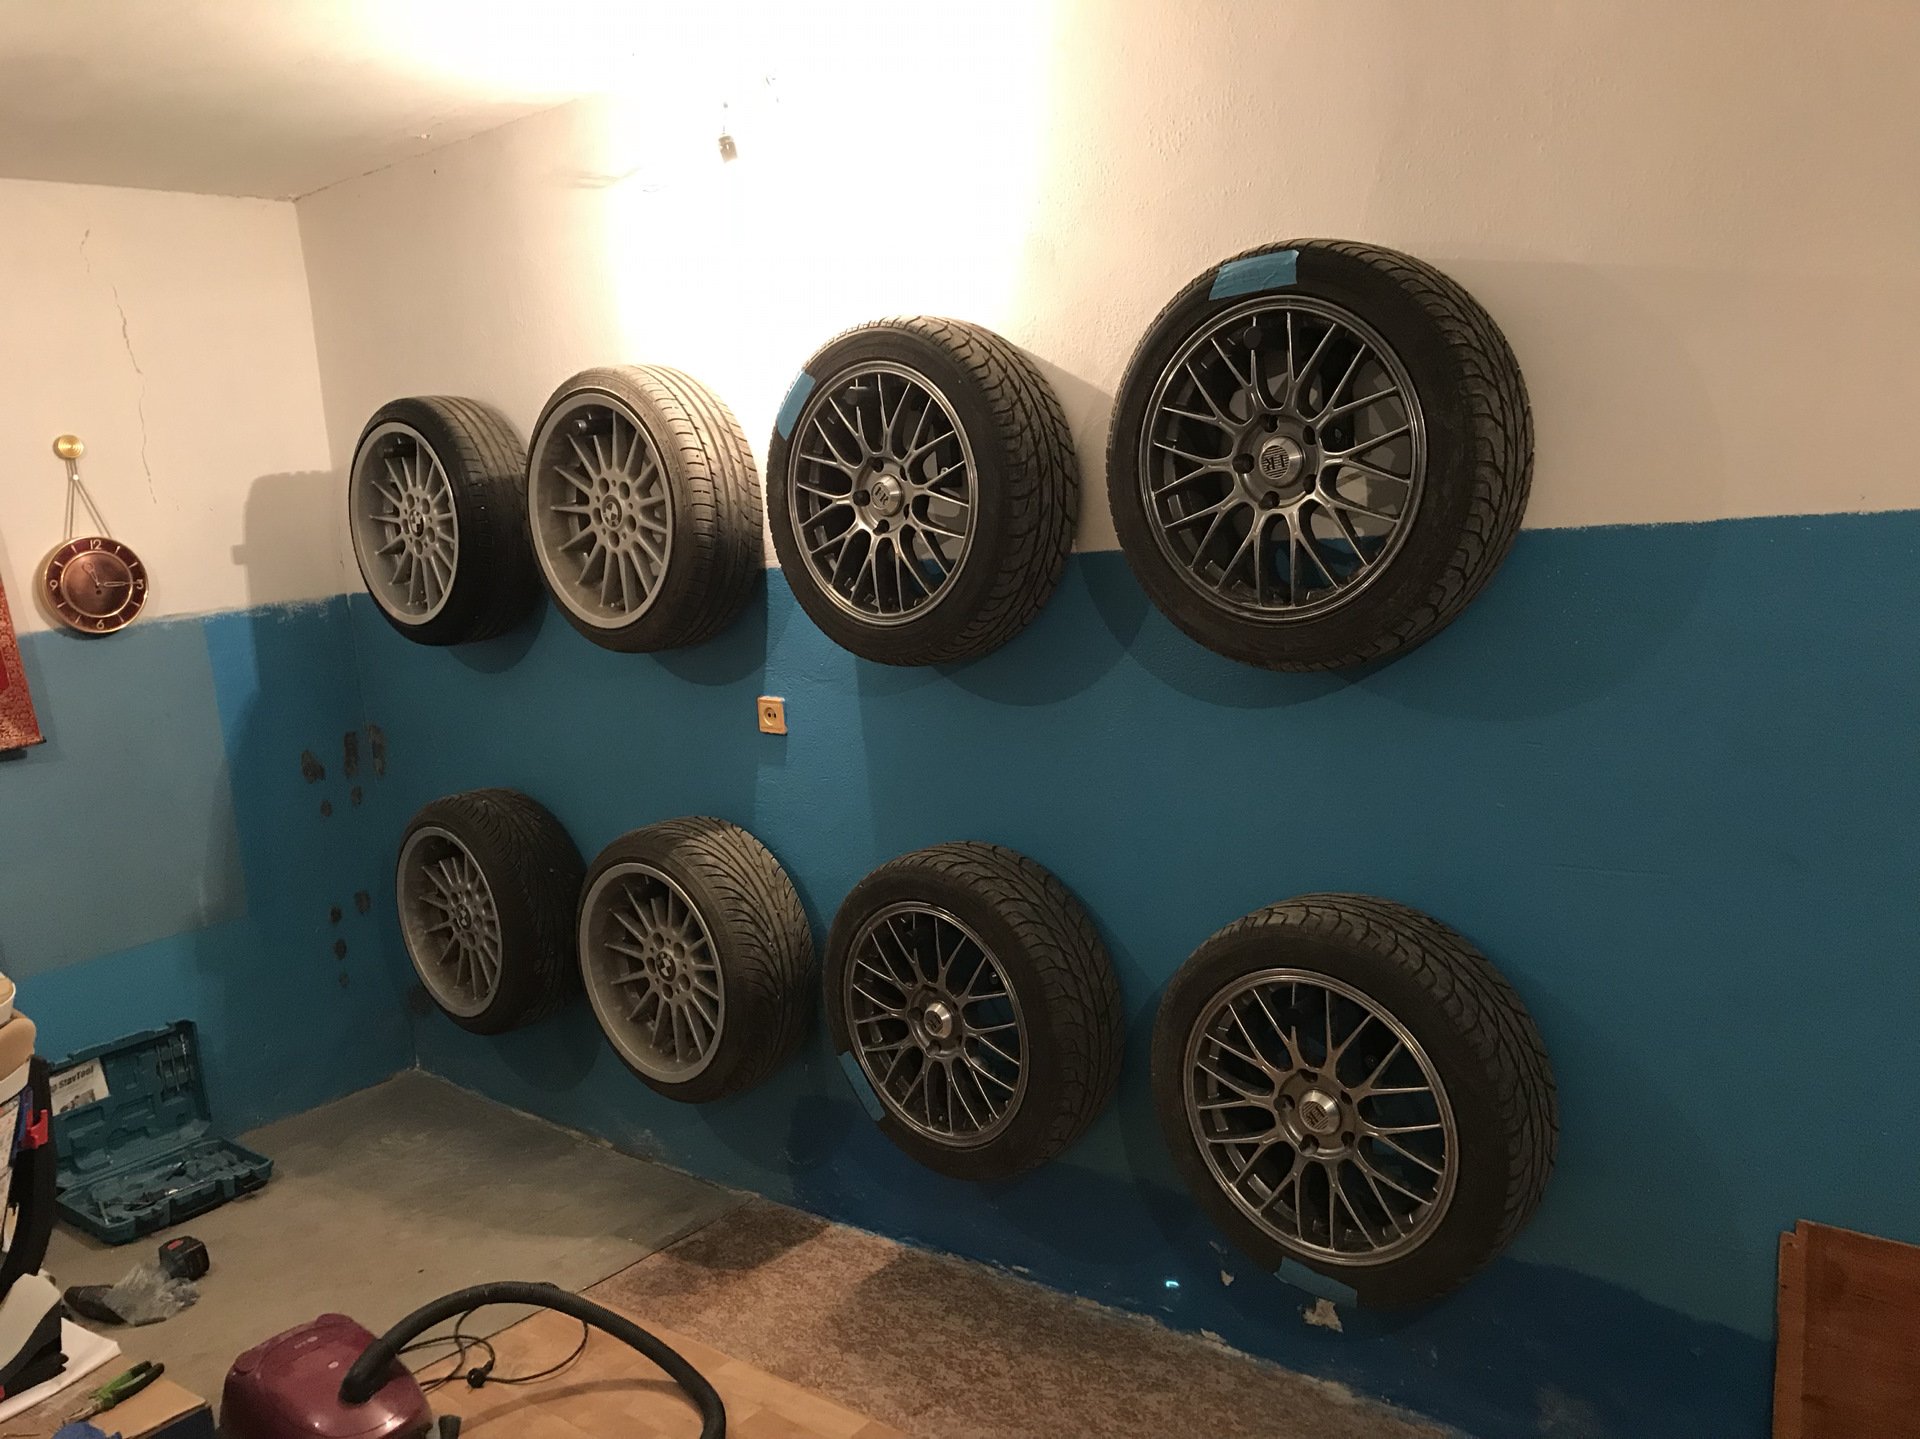 Храним колеса рф спб. Колеса на стену в гараже. Хранение колес в гараже. Стеллаж для колес в гараж. Хранение калес в гараже.